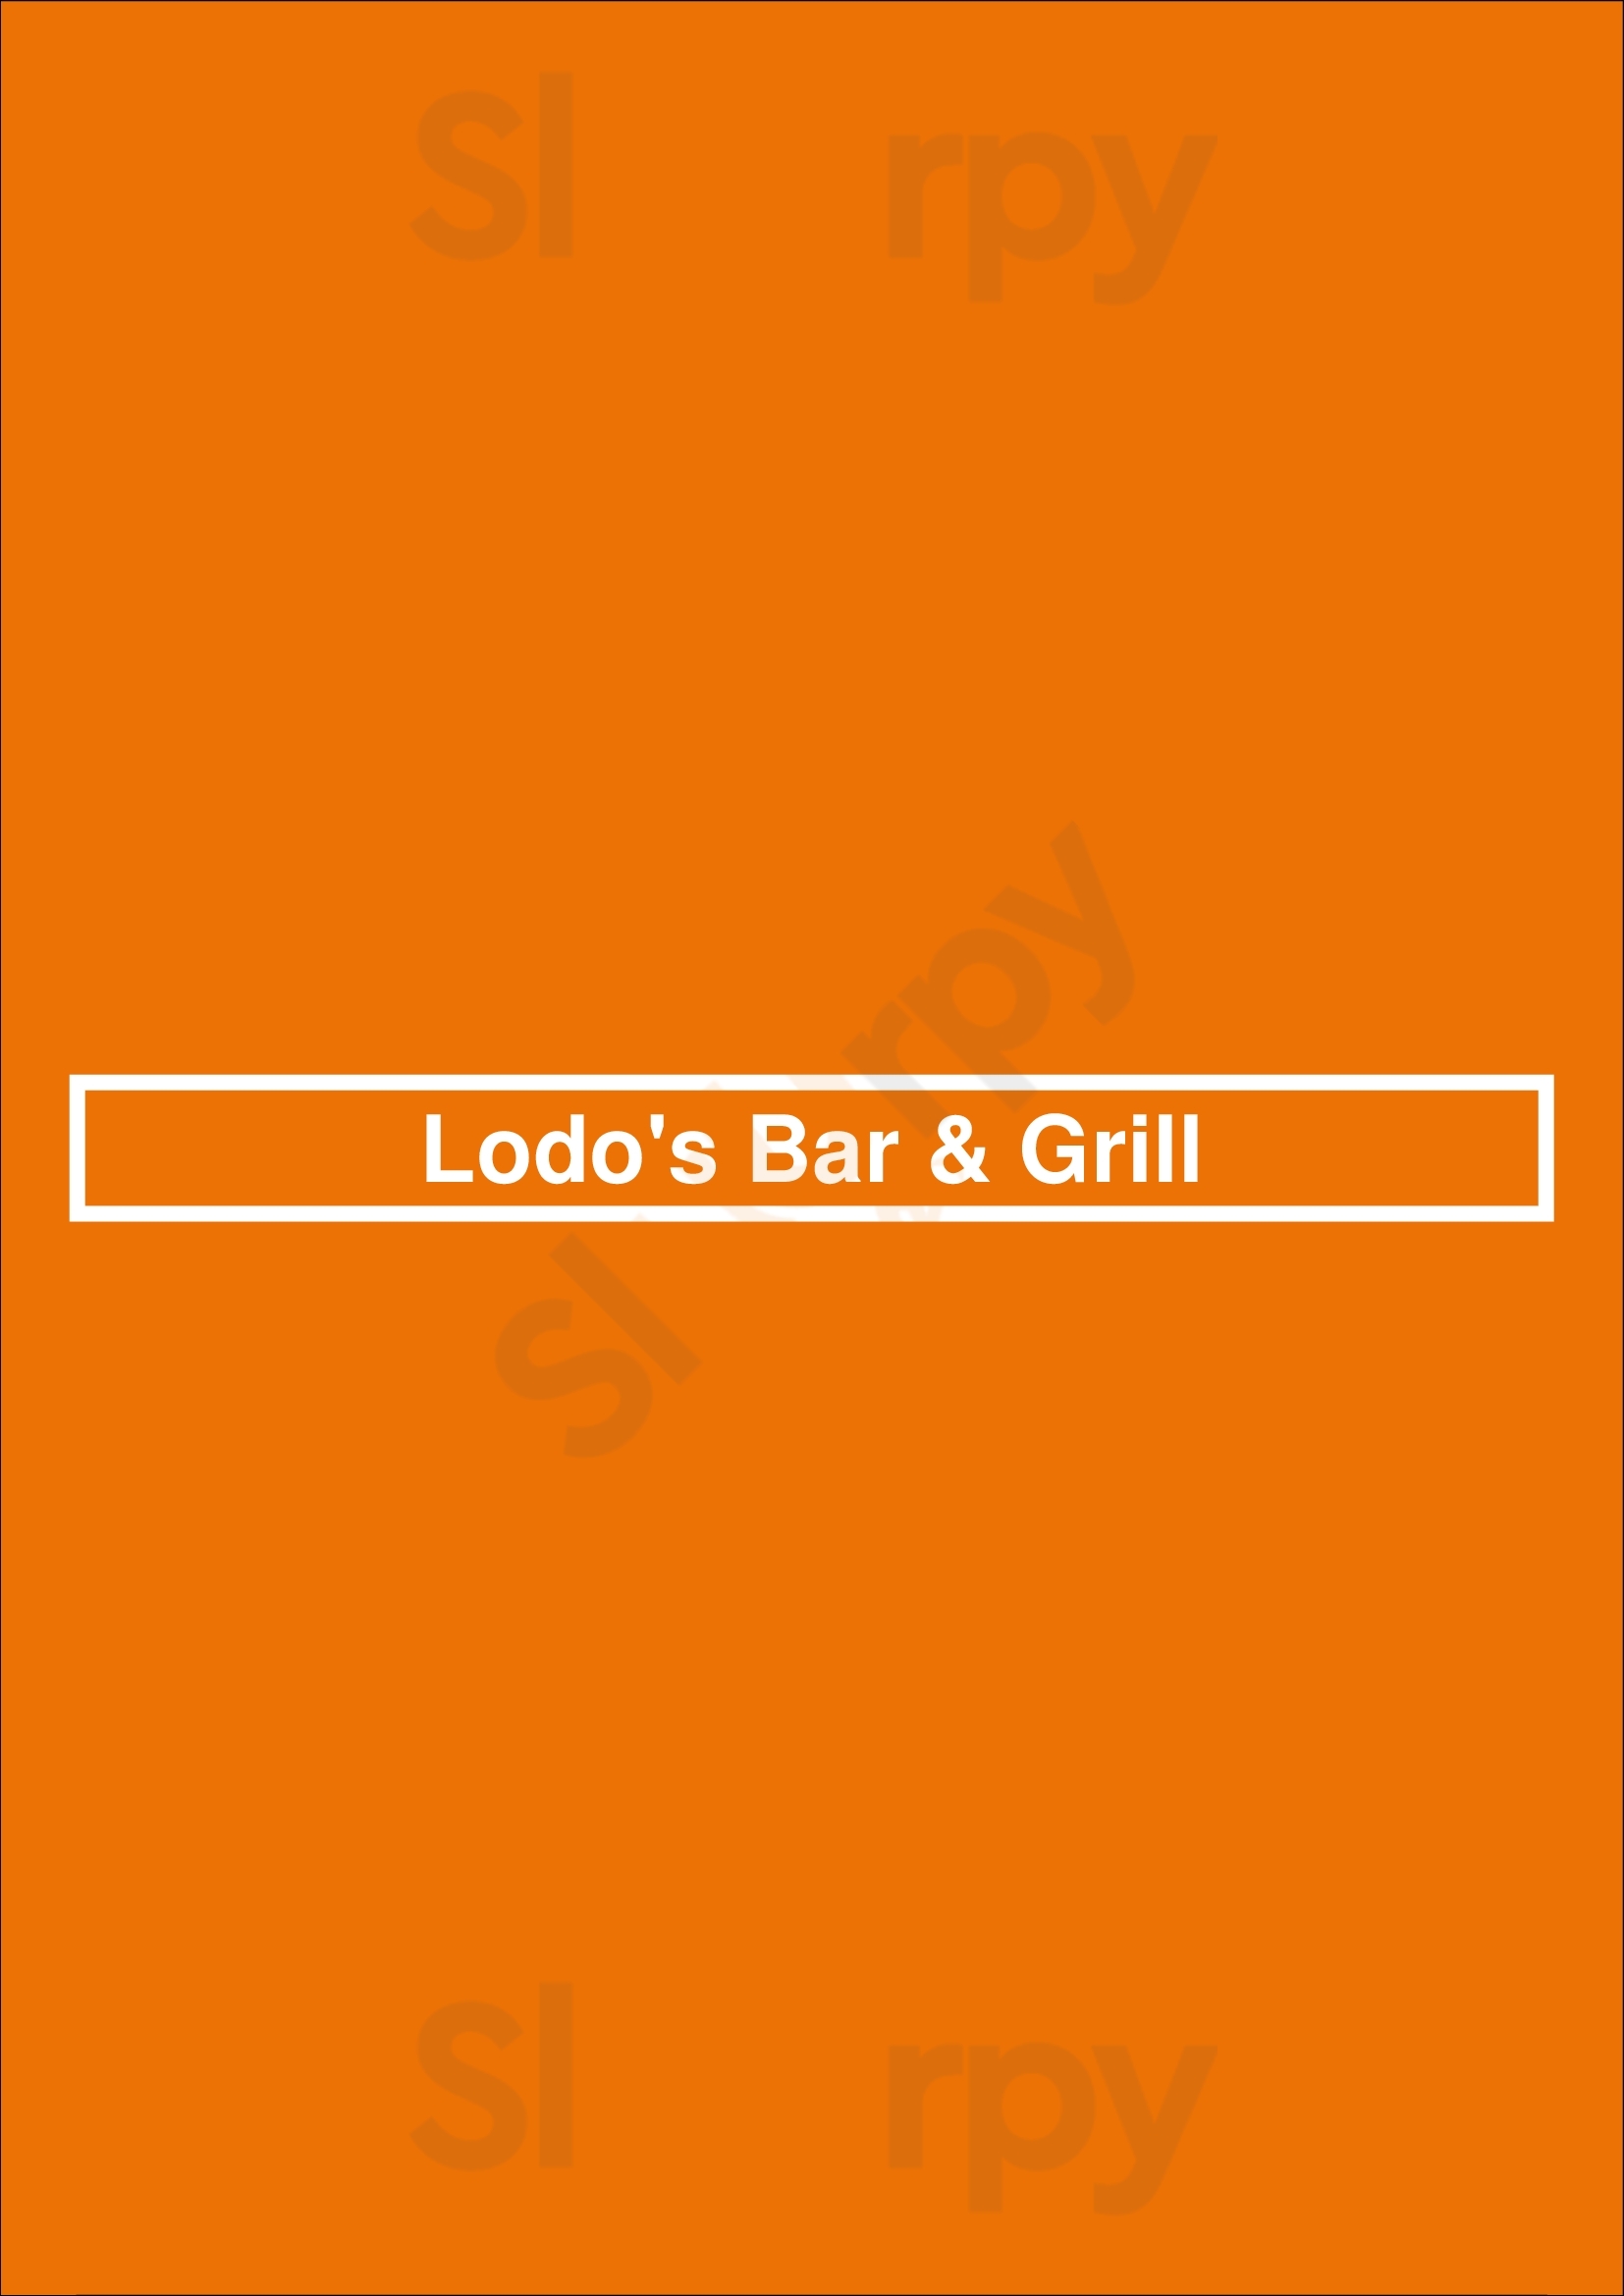 Lodo's Bar & Grill Denver Menu - 1